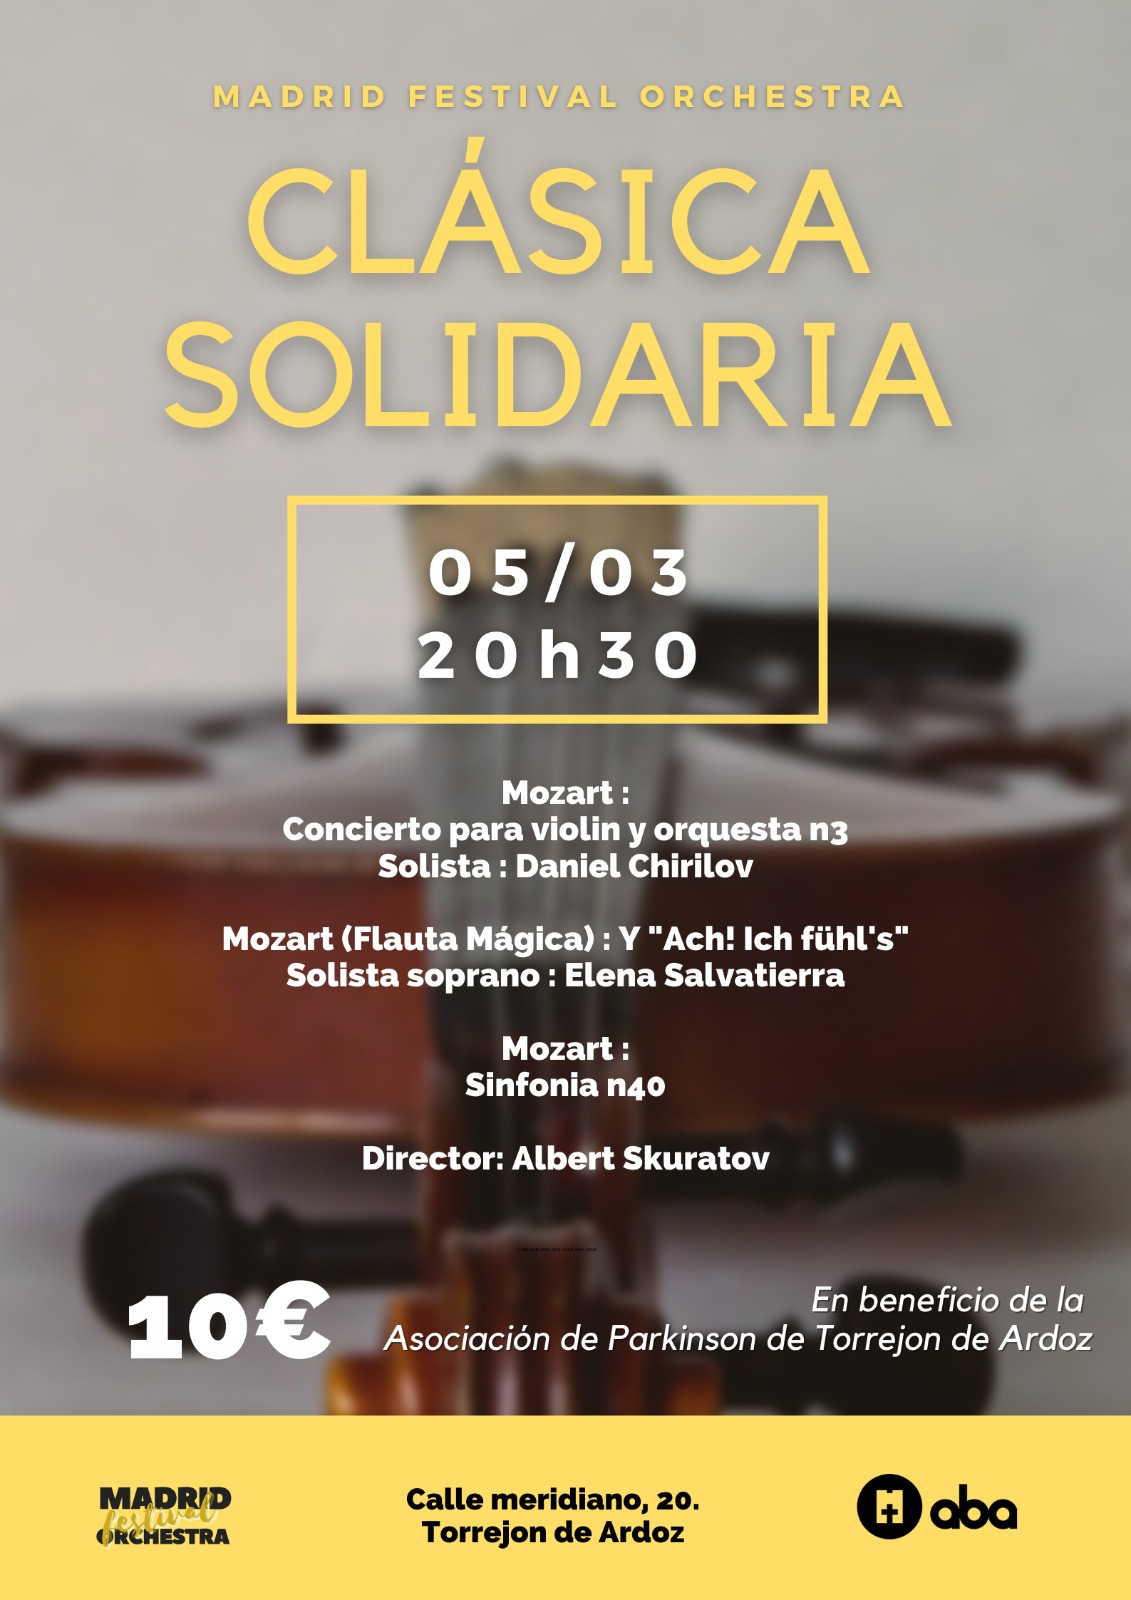 Clásica Solidaria a cargo de Madrid Festival Orchestra